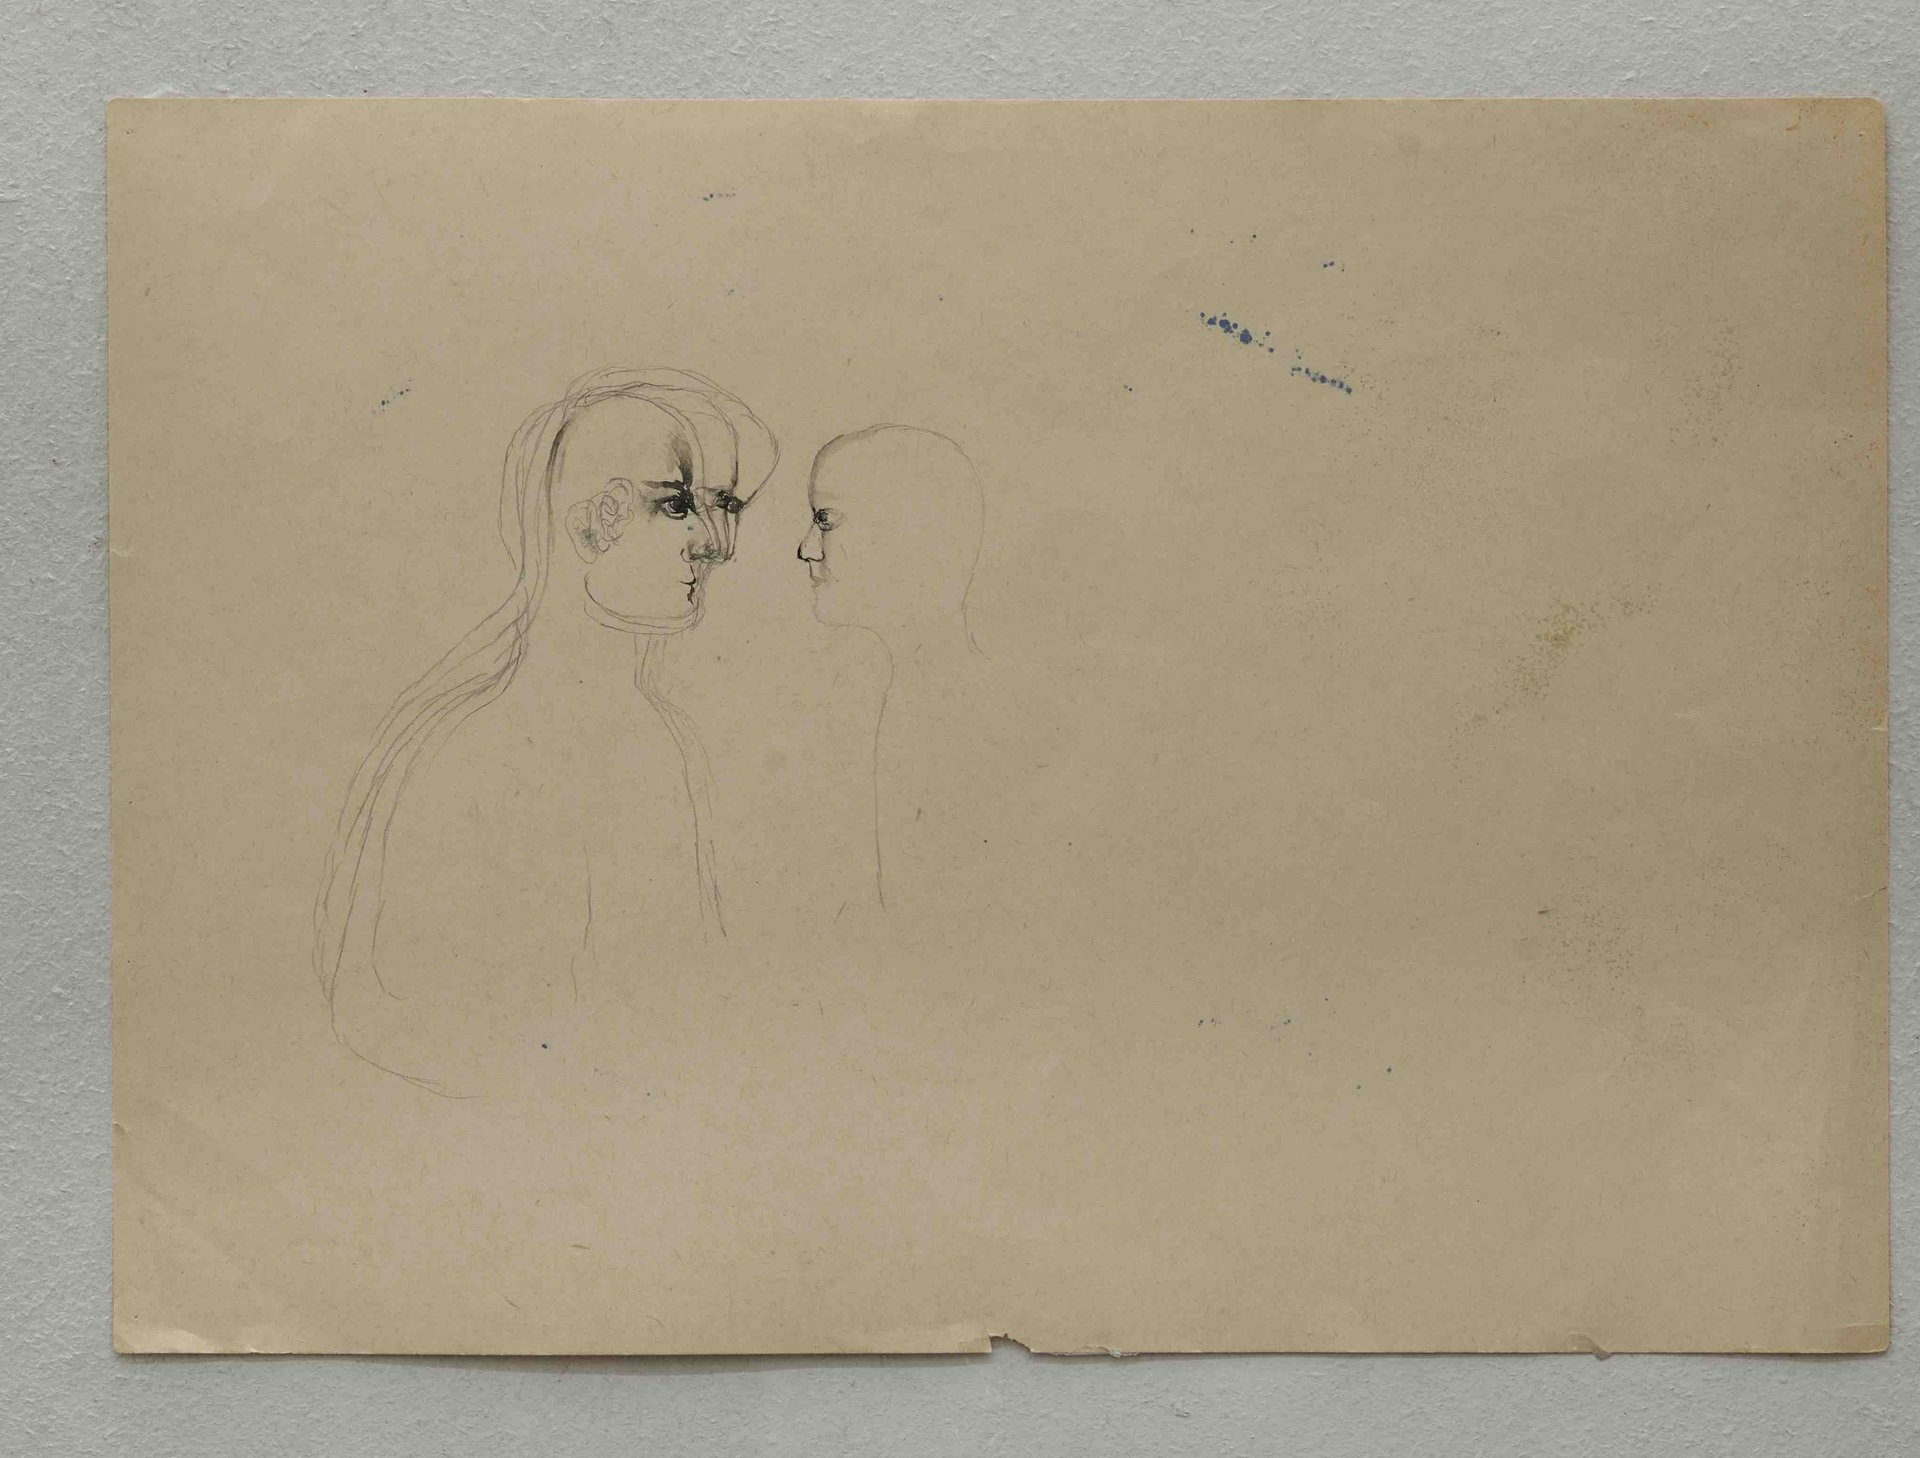 Tolia Astakhishvili, gossip, 2023, ink, pencil, paper, 21 x 29 cm.